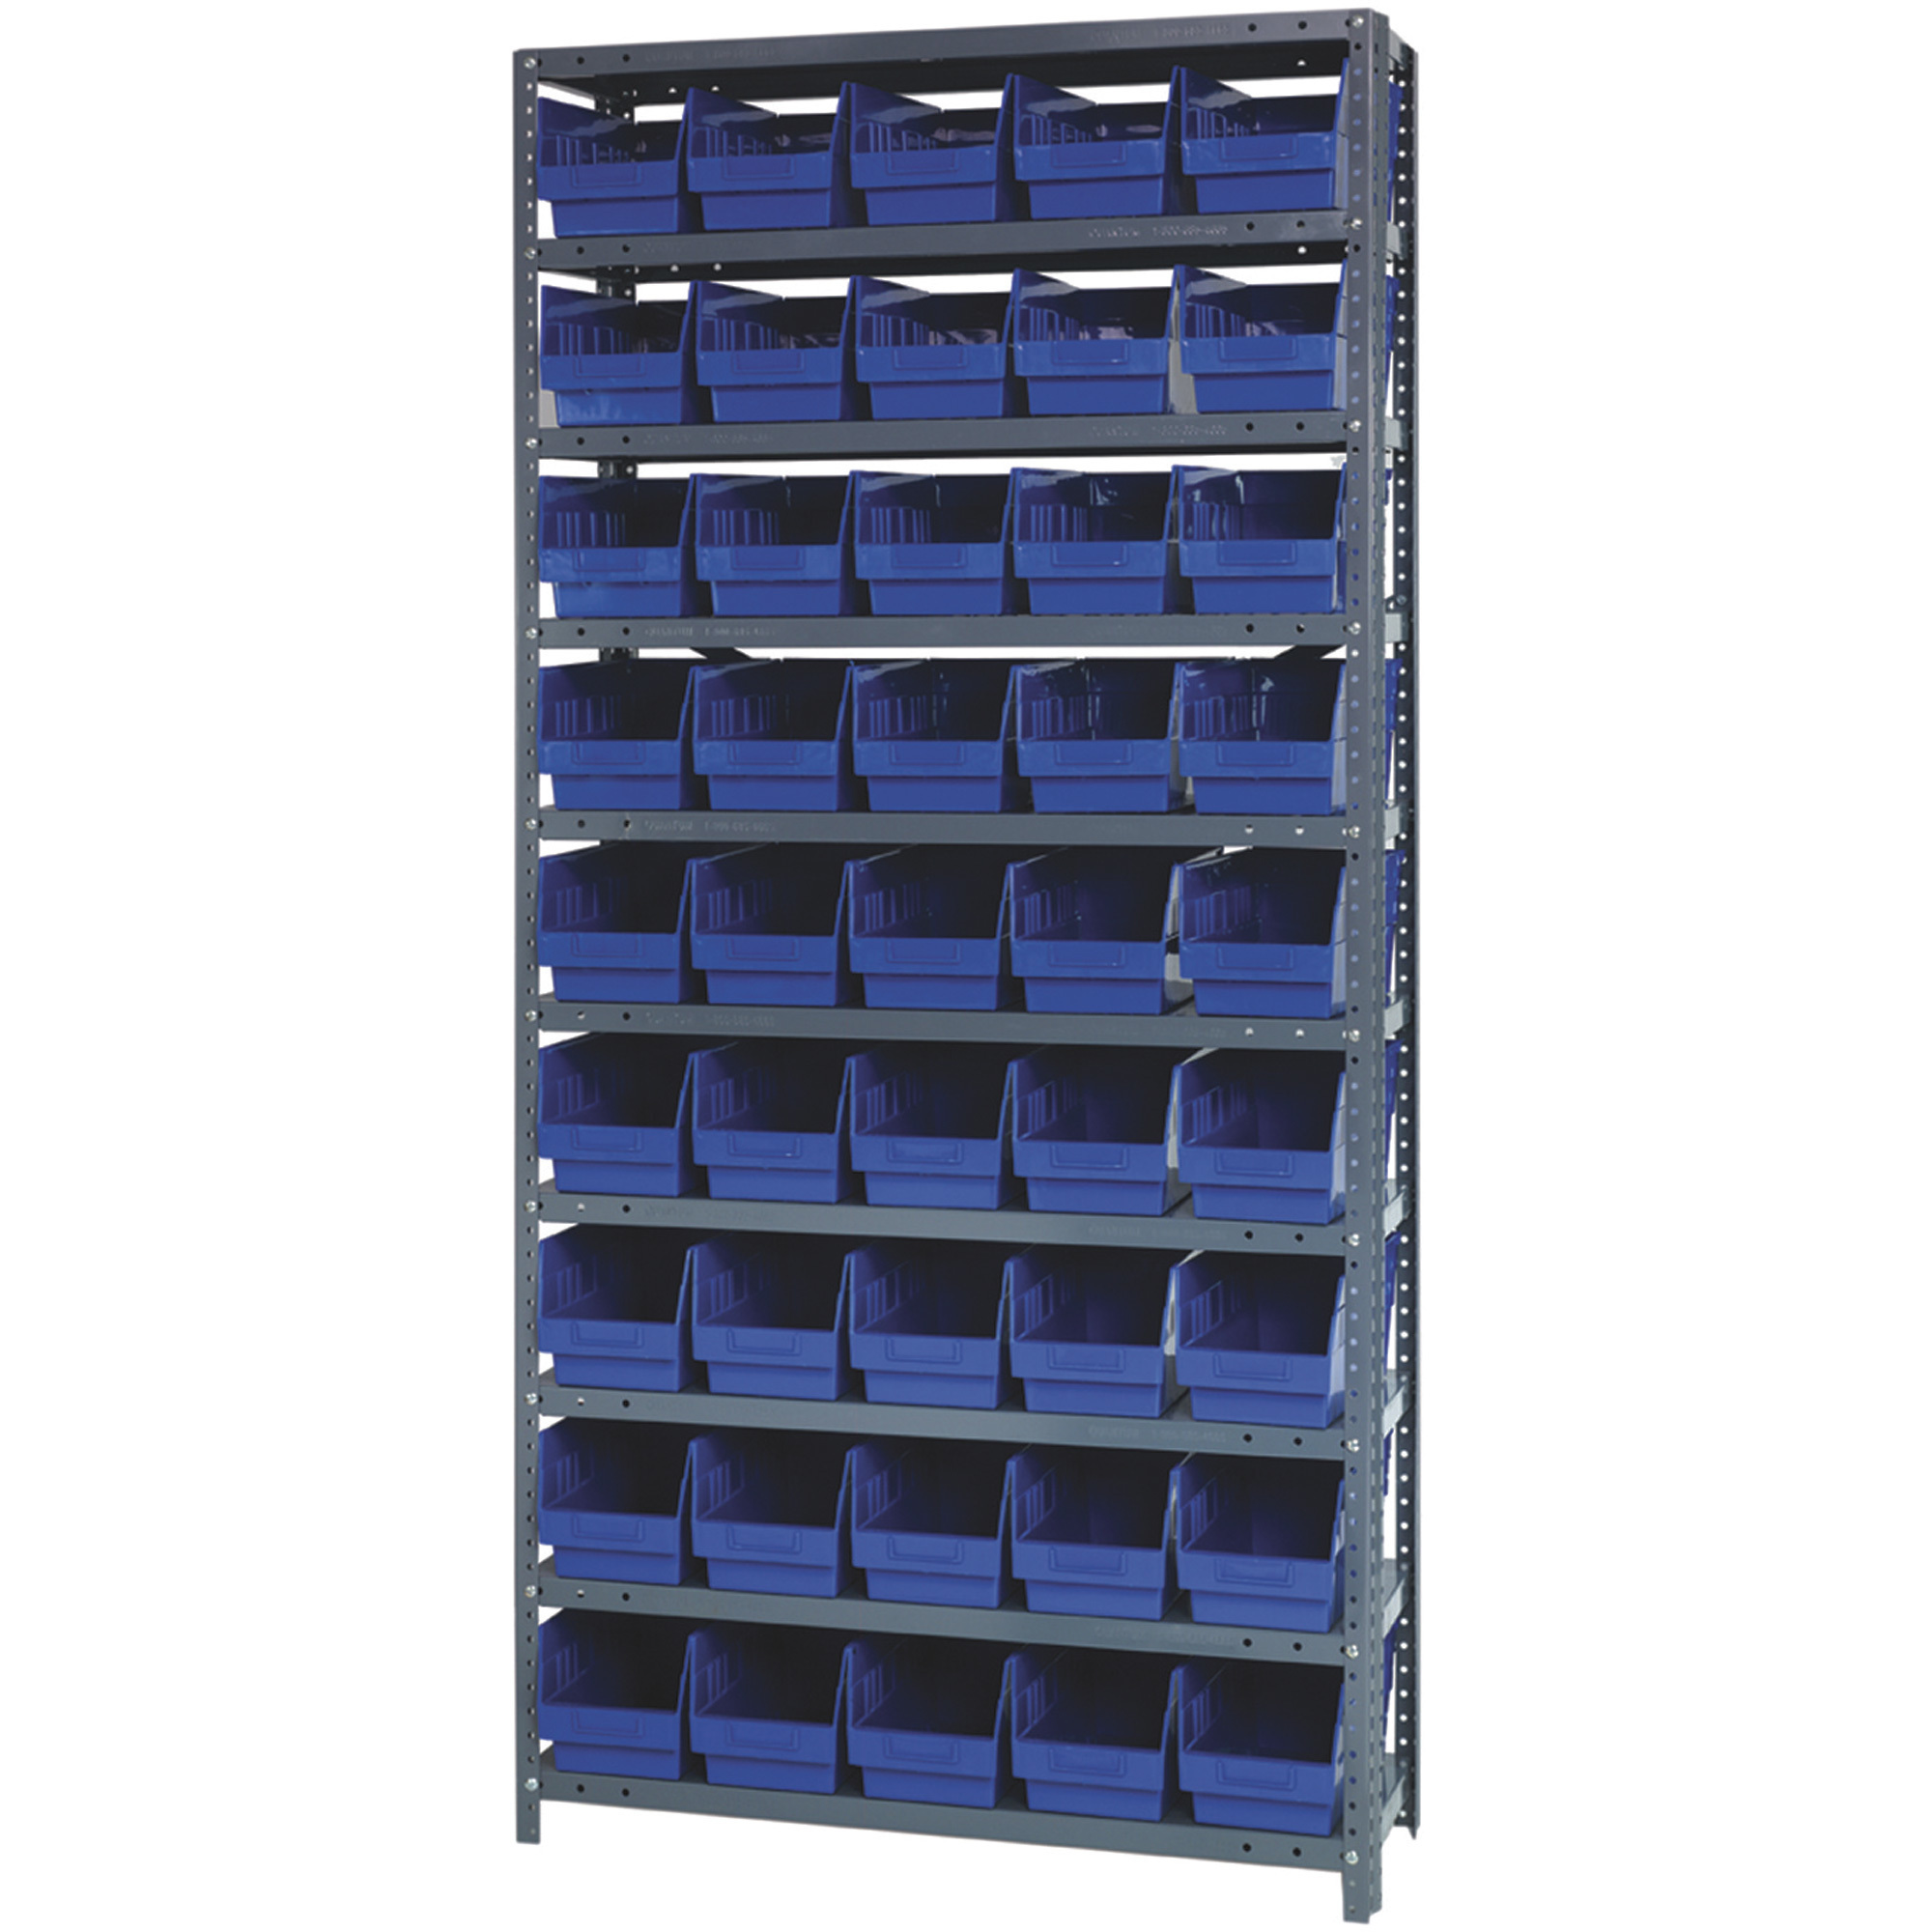 Quantum Storage Metal Shelving Unit with 45 Bins, 36Inch W x 18Inch D x 75Inch H, Blue, Model 1875-204BL